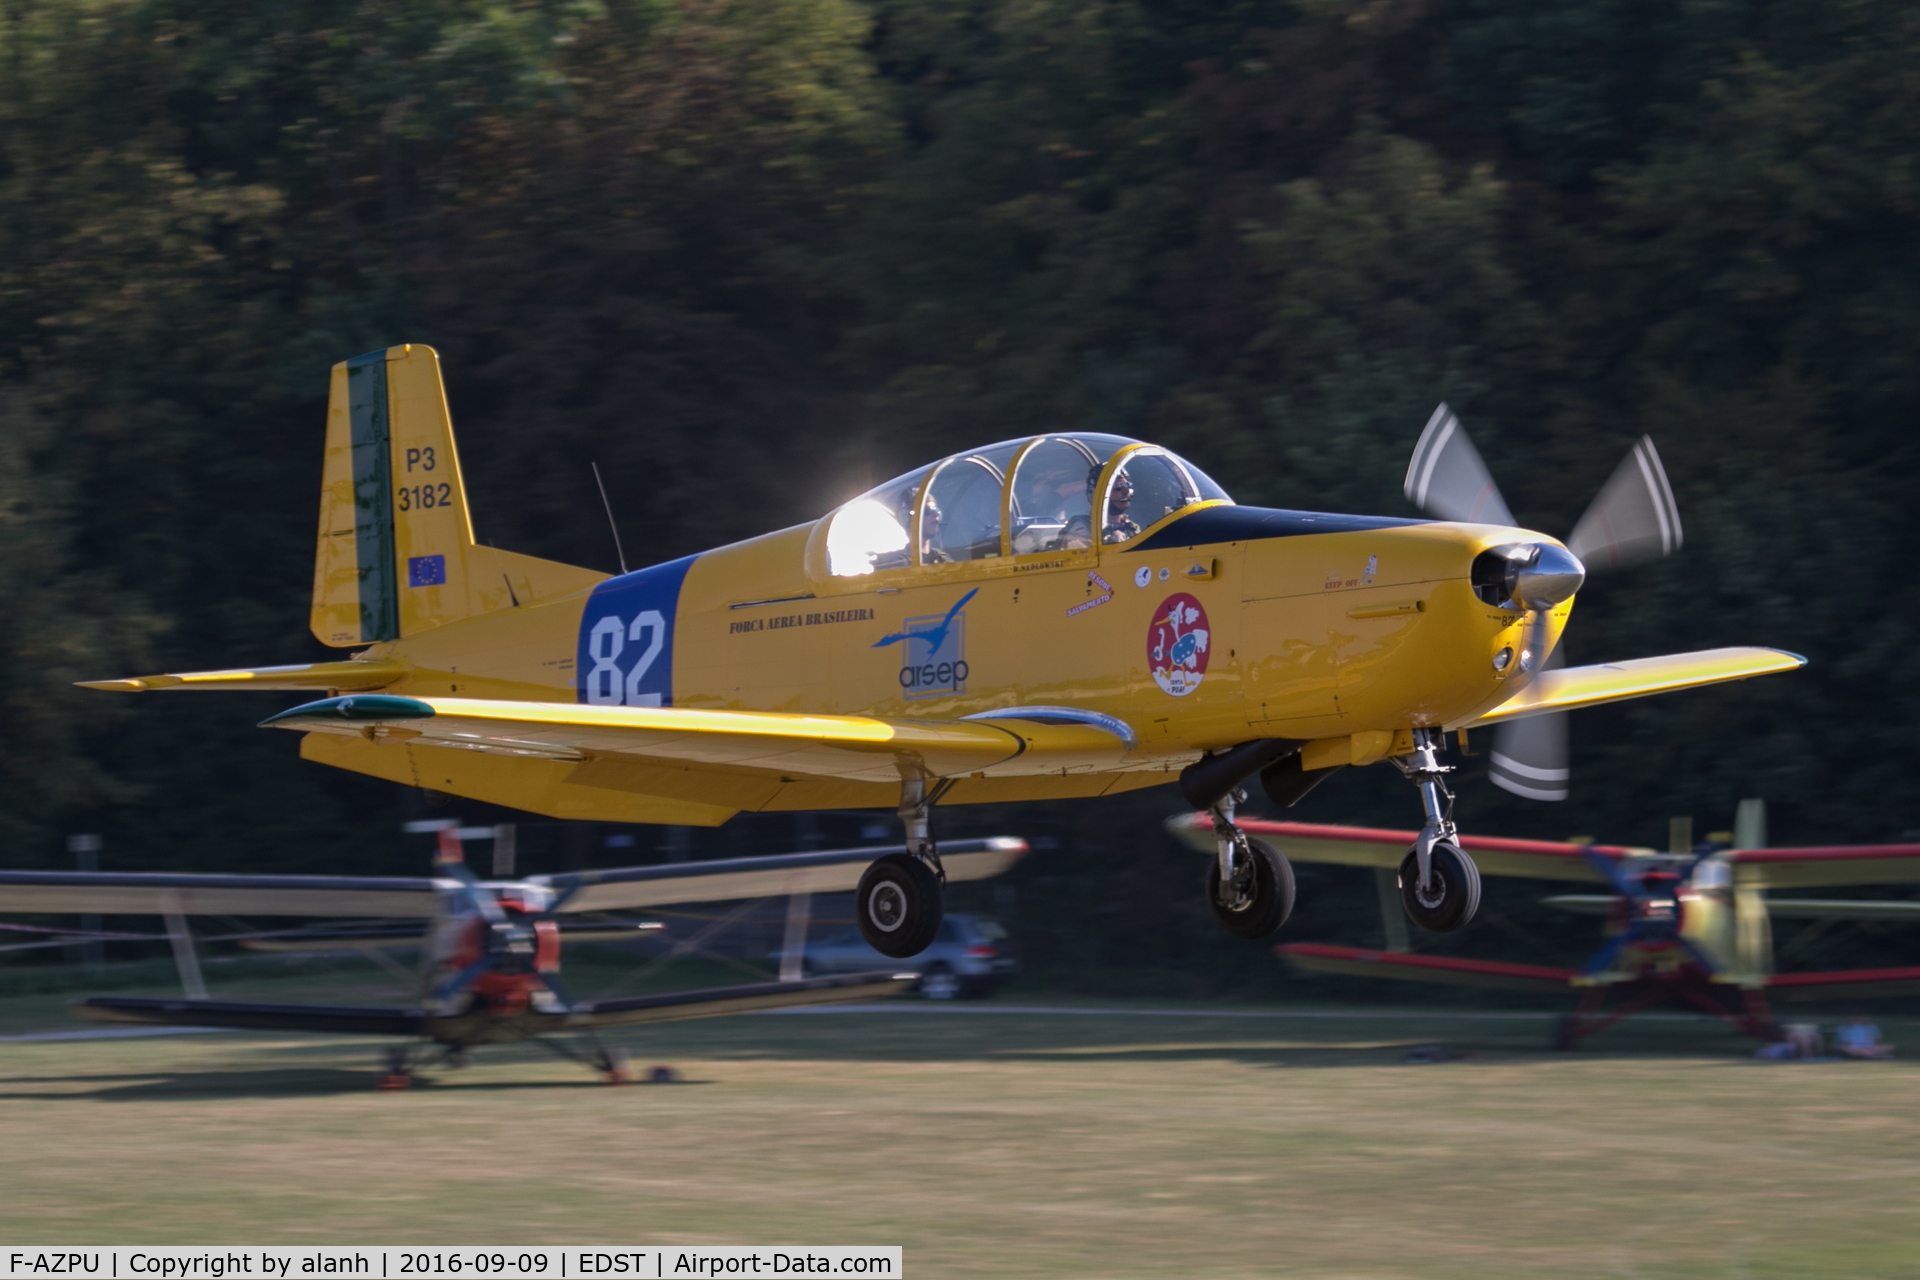 F-AZPU, 1958 Pilatus P3-05 C/N 465-14, Arriving at the 2016 Hahnweide Oldtimer Fliegertreffen